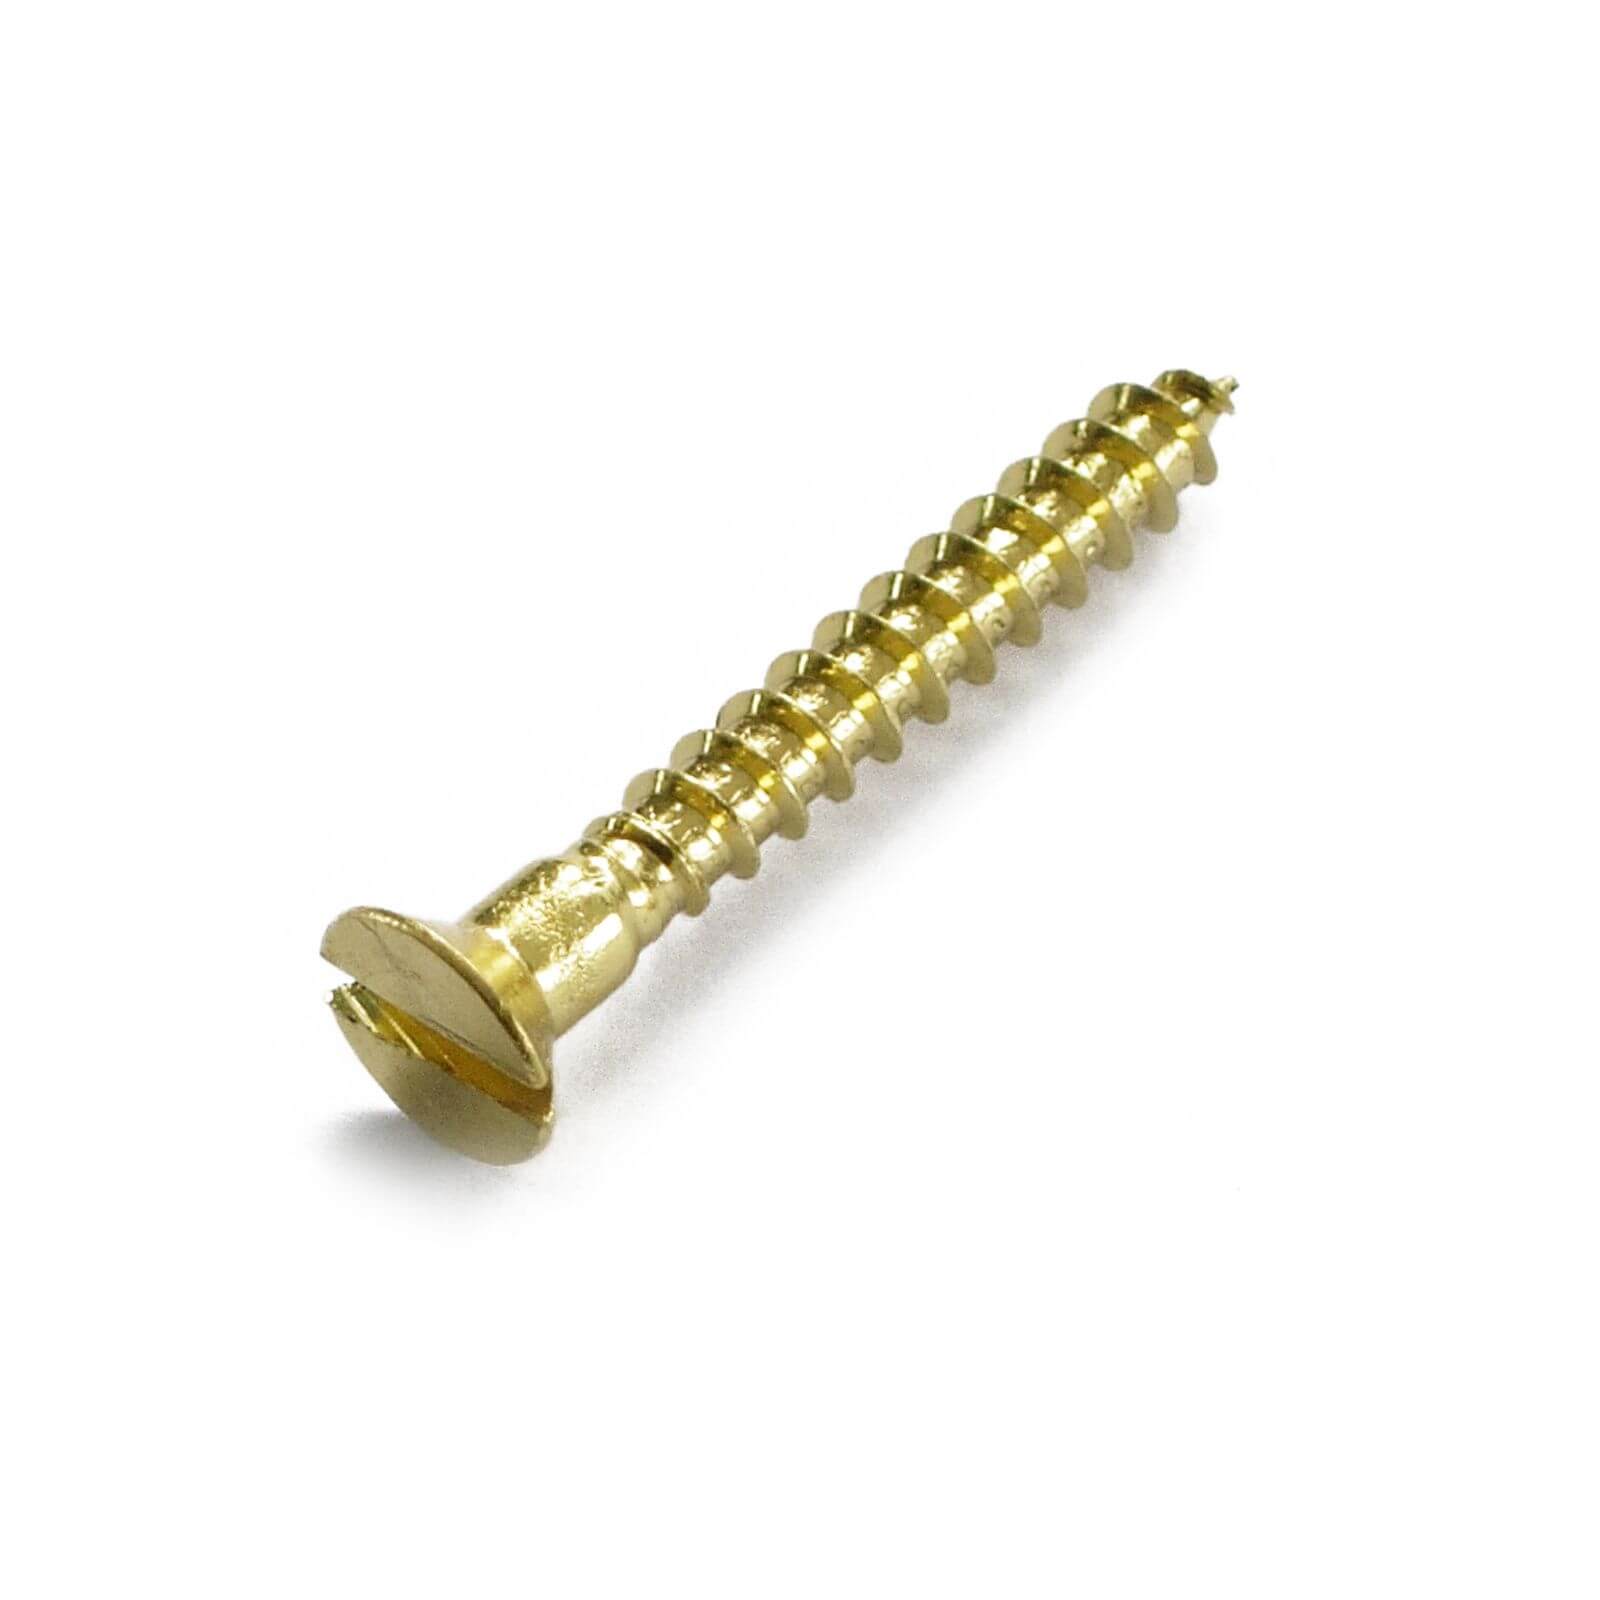 Wood Screw - Countersunk - Brass - 2.5 x 12mm - 10 Pack